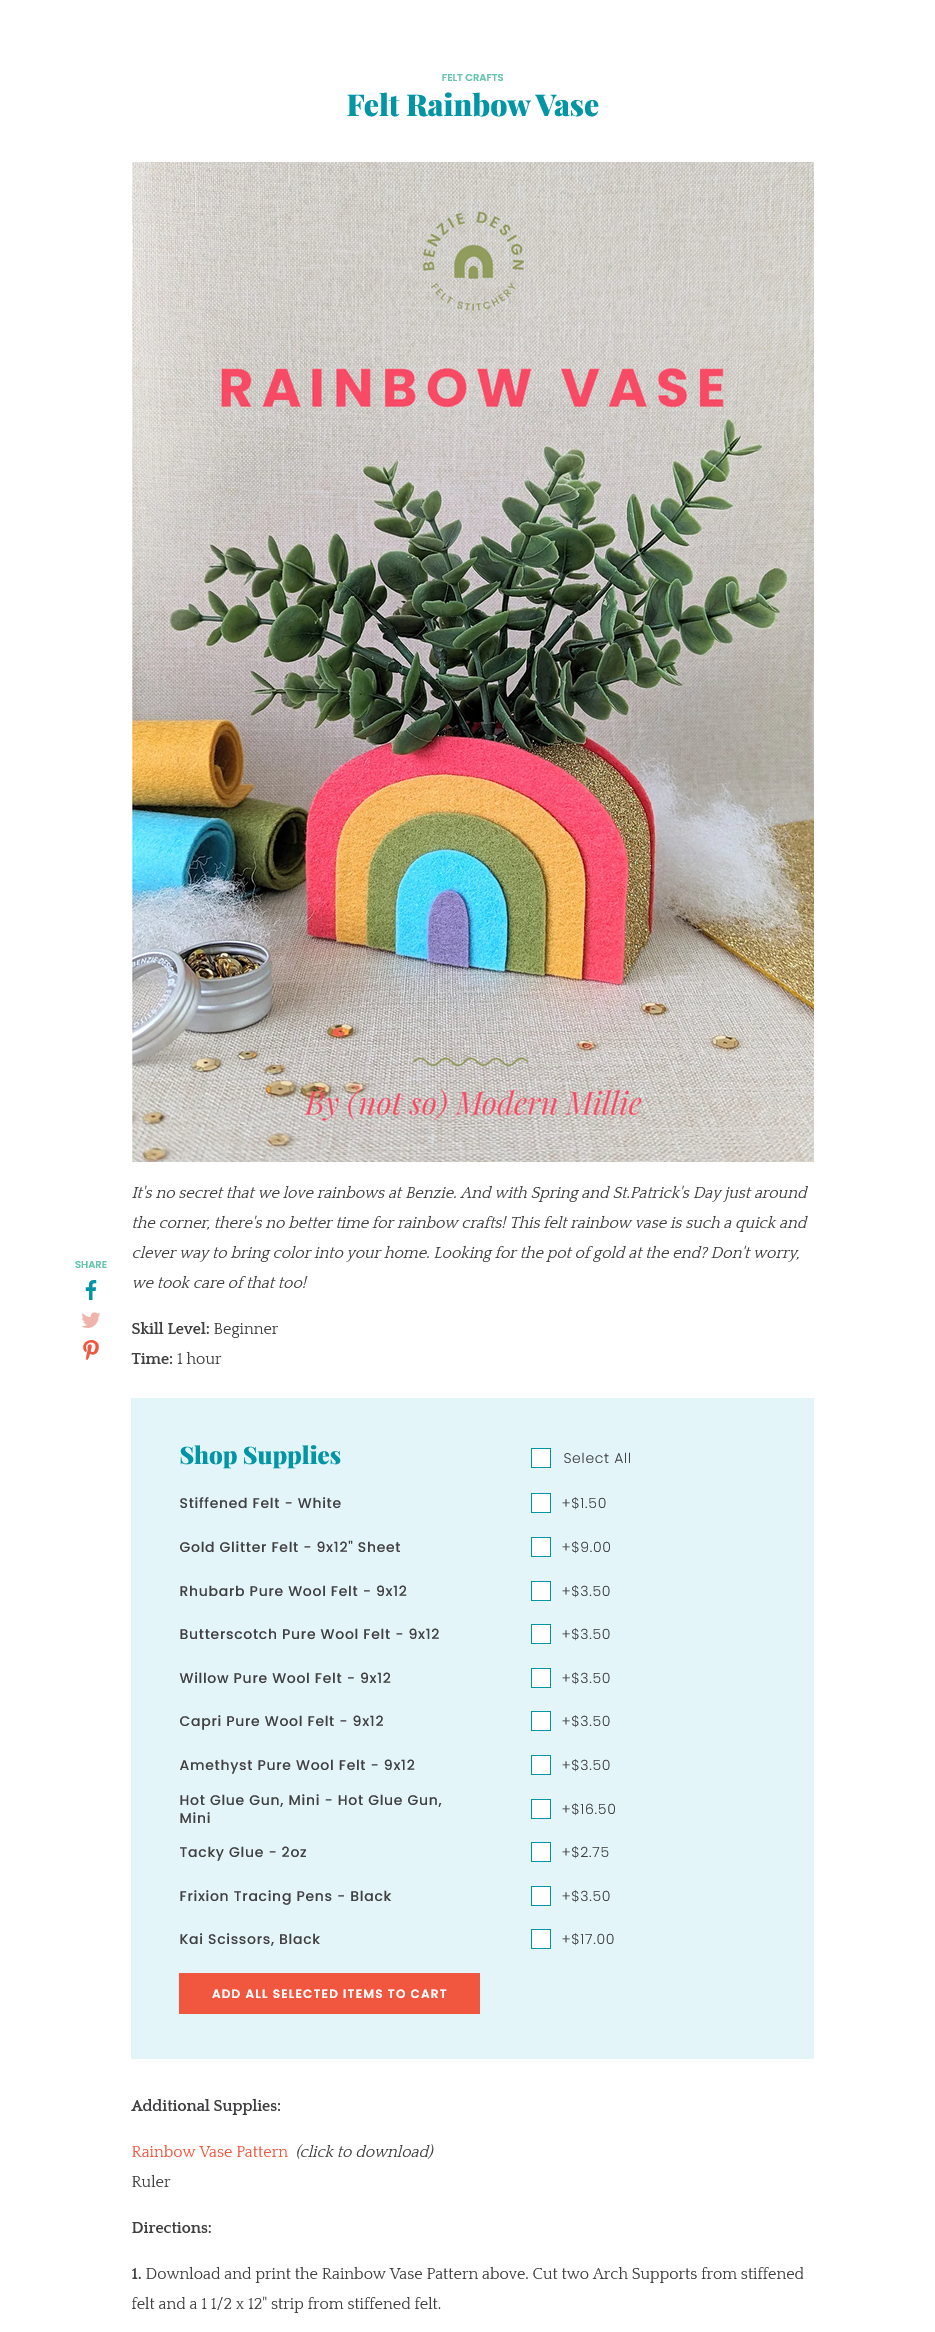 Benzie Design craft tutorial blog post with shoppable supplies list